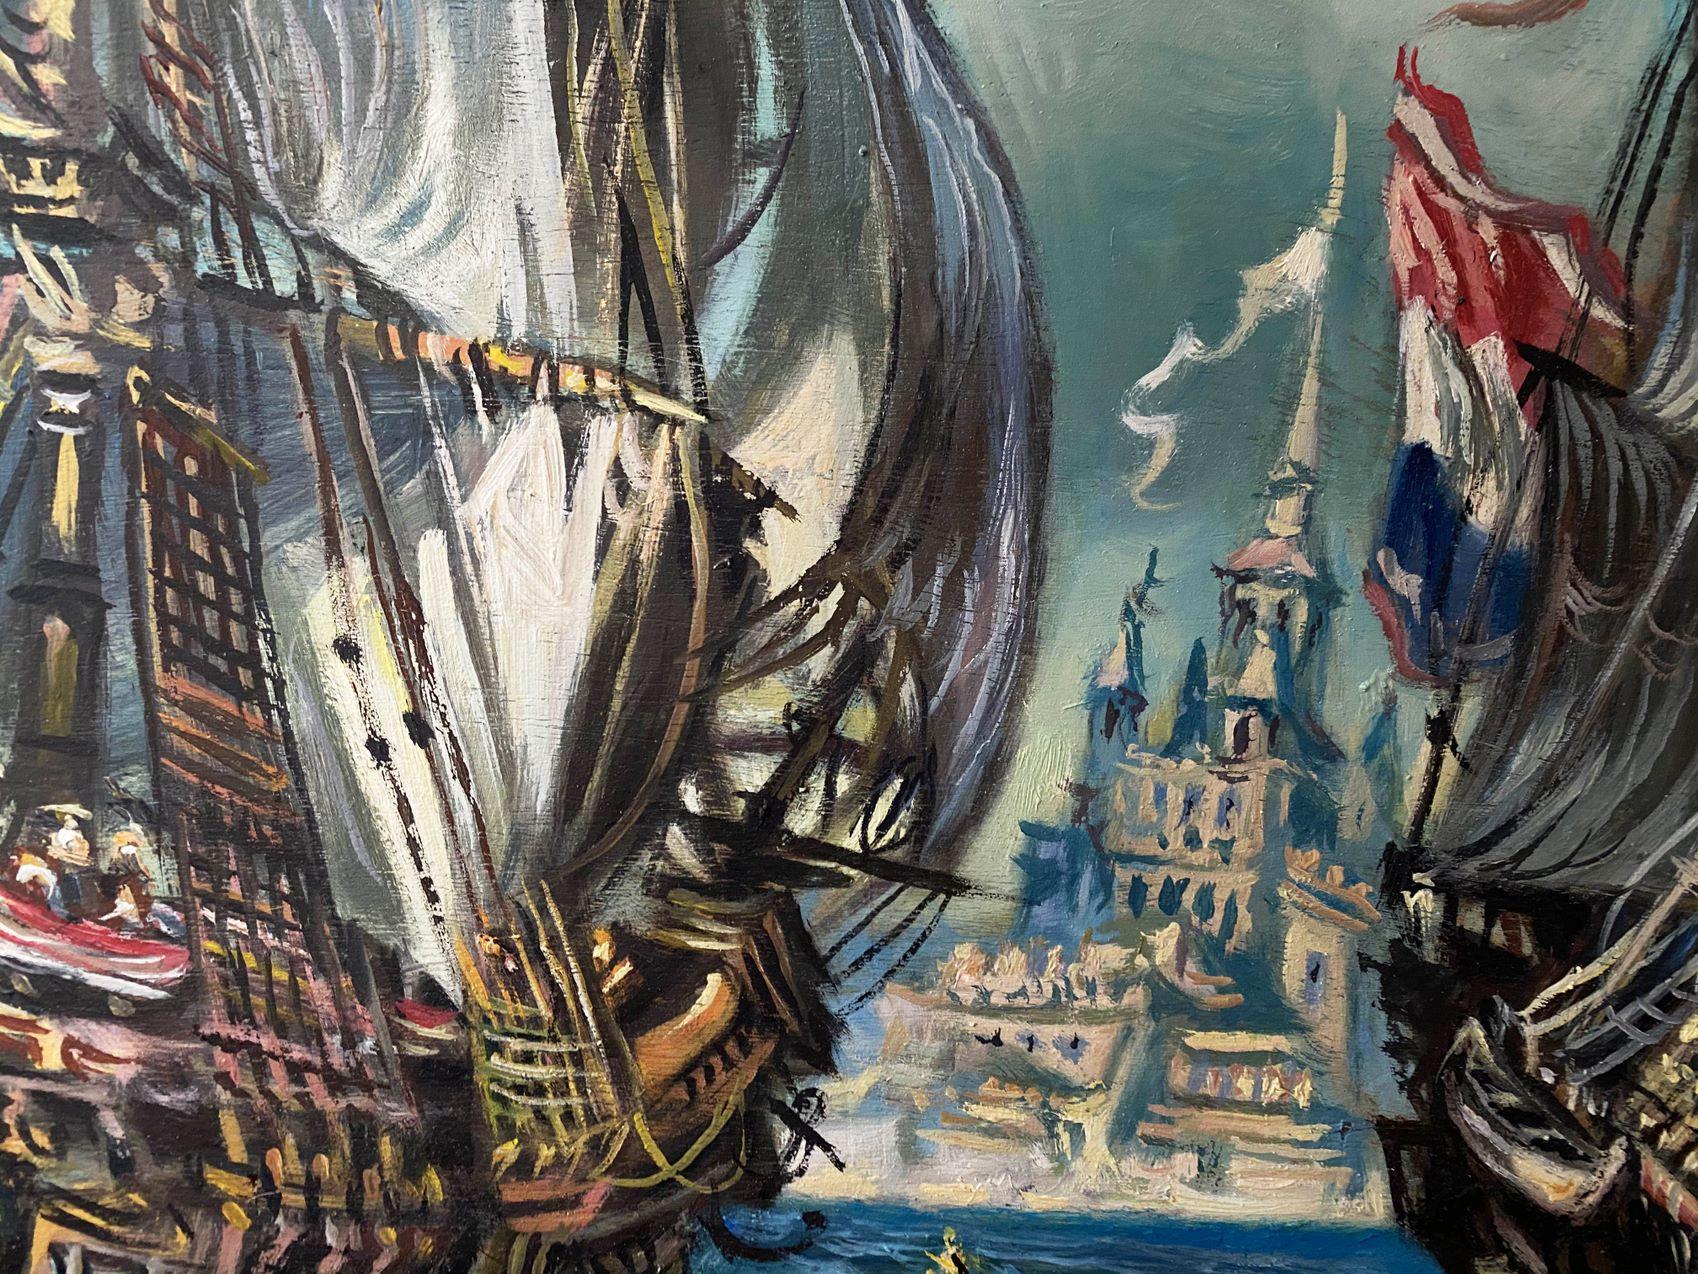 Artist: Alexander Litvinov
Work: Original oil painting, handmade artwork, one of a kind 
Medium: Oil on Cardboard
Style: Classic Figurative
Year: 2000
Title: 18th Century Ships
Size: 20